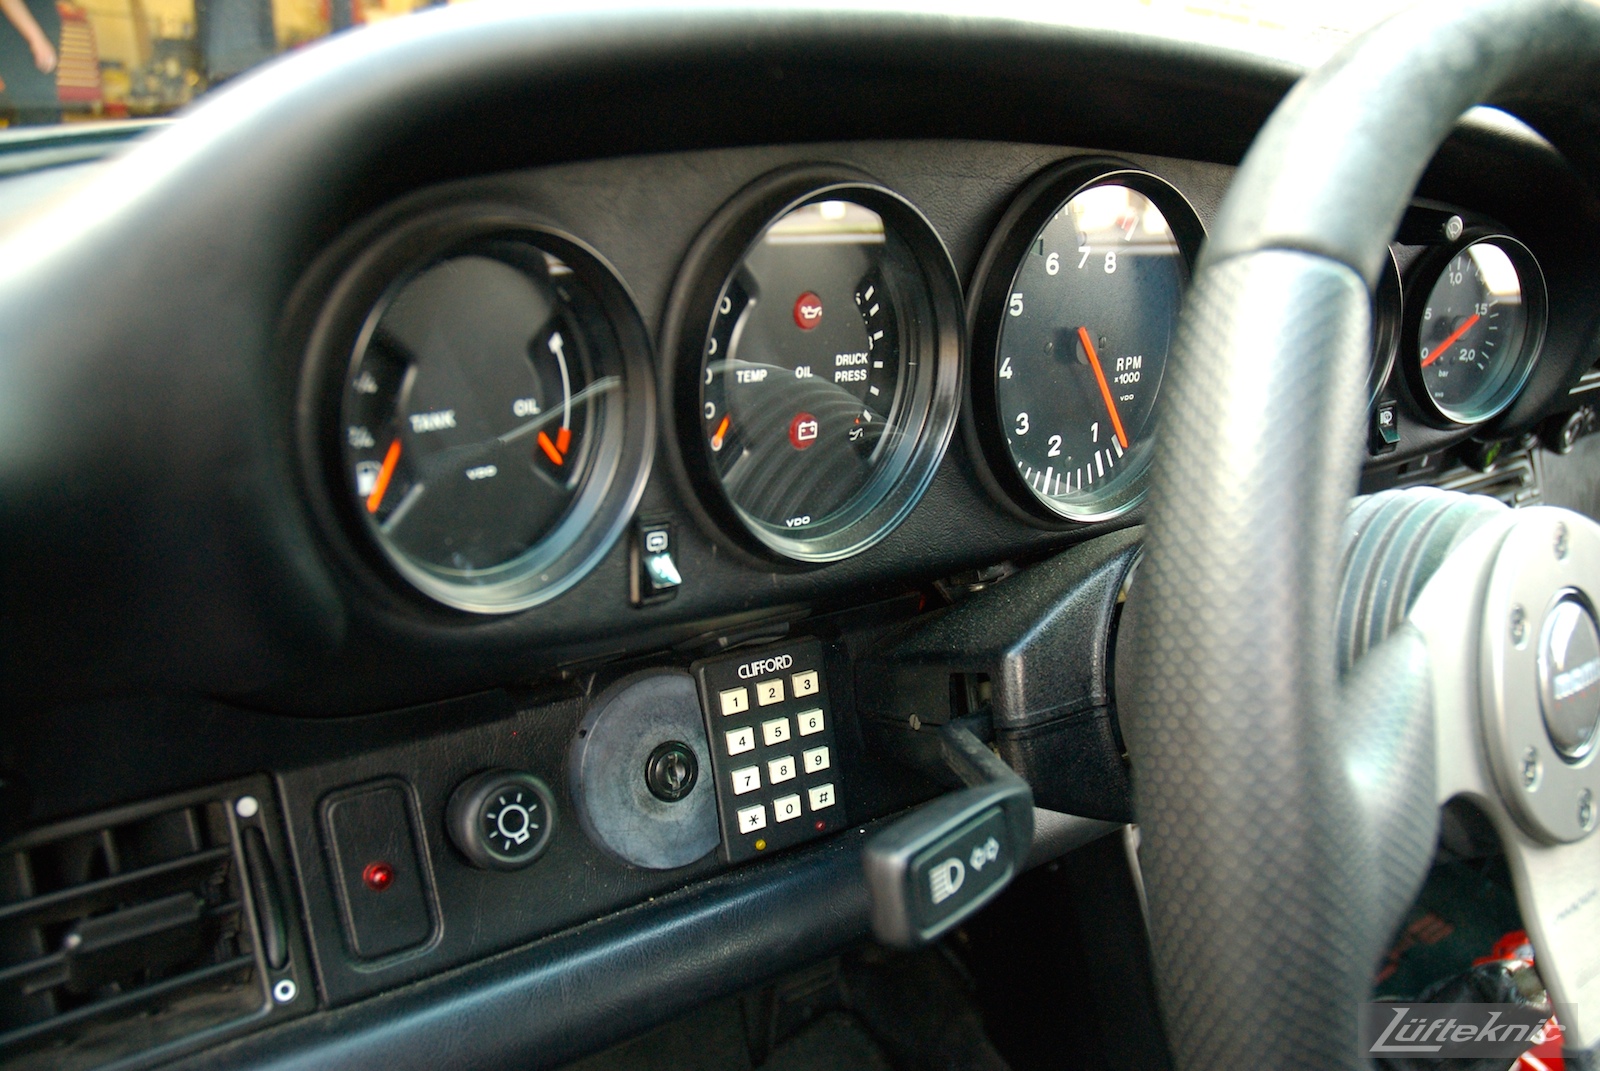 Porsche Turbo gauges.